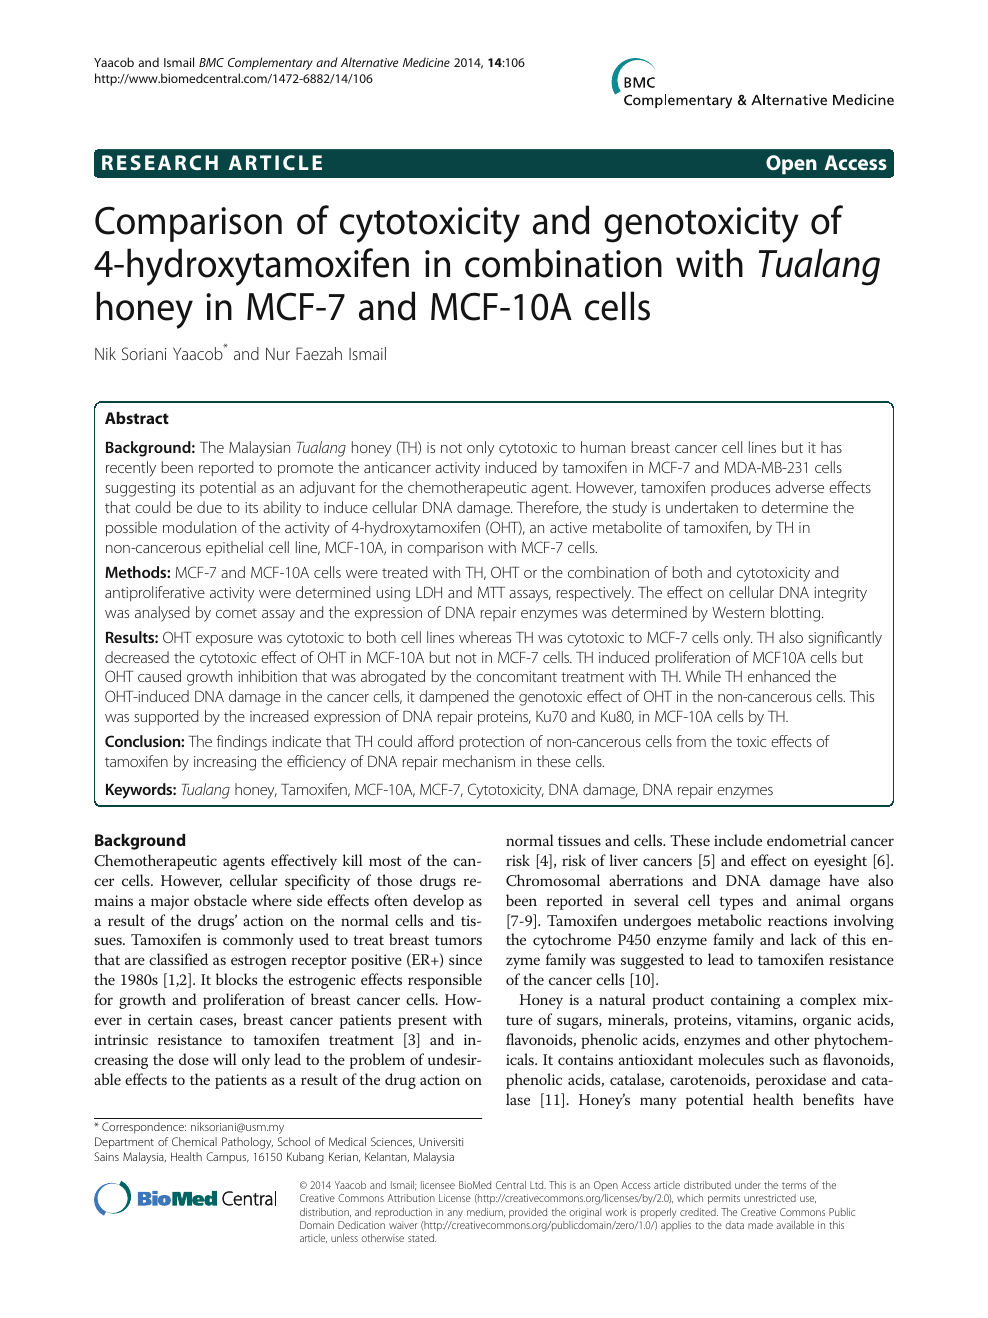 Comparison of cytotoxicity and genotoxicity of 4-hydroxytamoxifen 